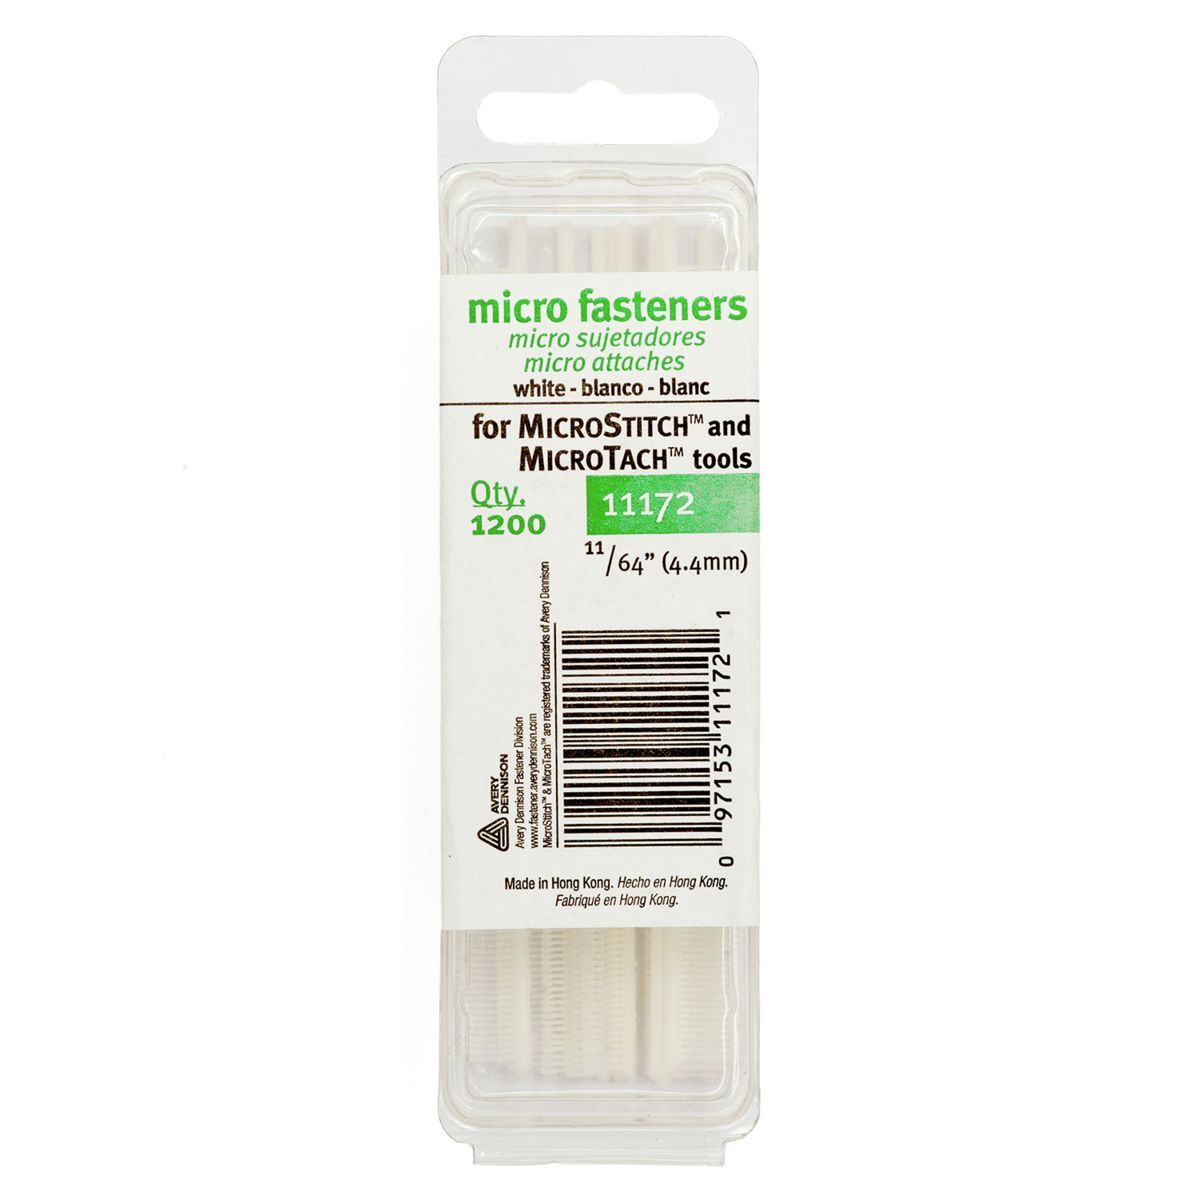 Avery Dennison 111720 4.4mm Micro Stitch Fastener Refills, White